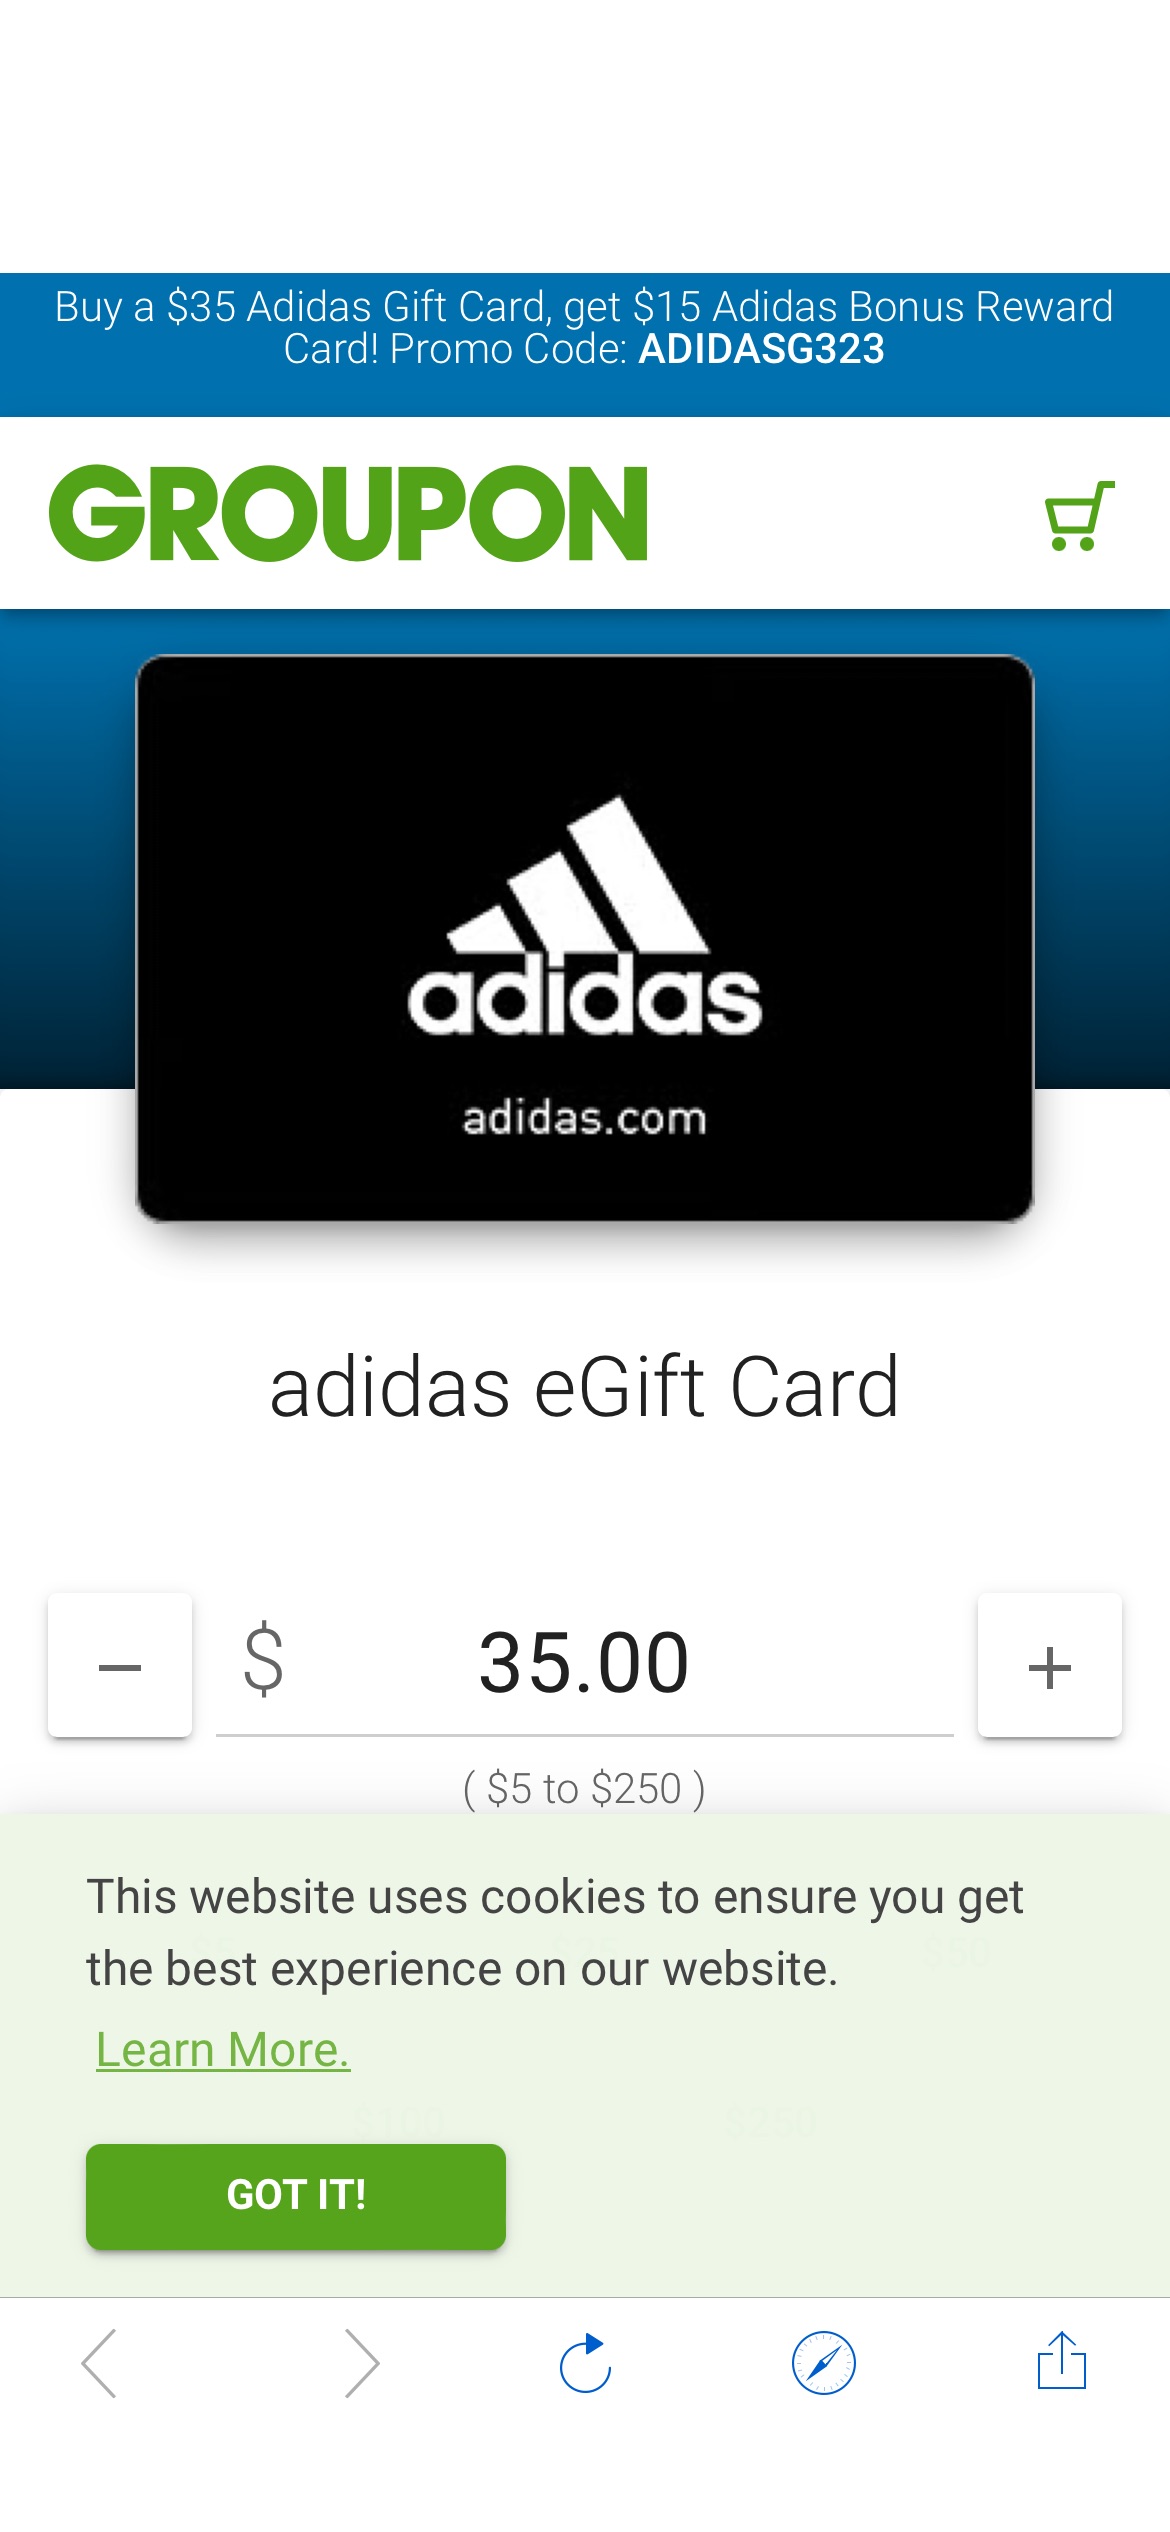 Adidas eGift Cards -buy $35, get $15